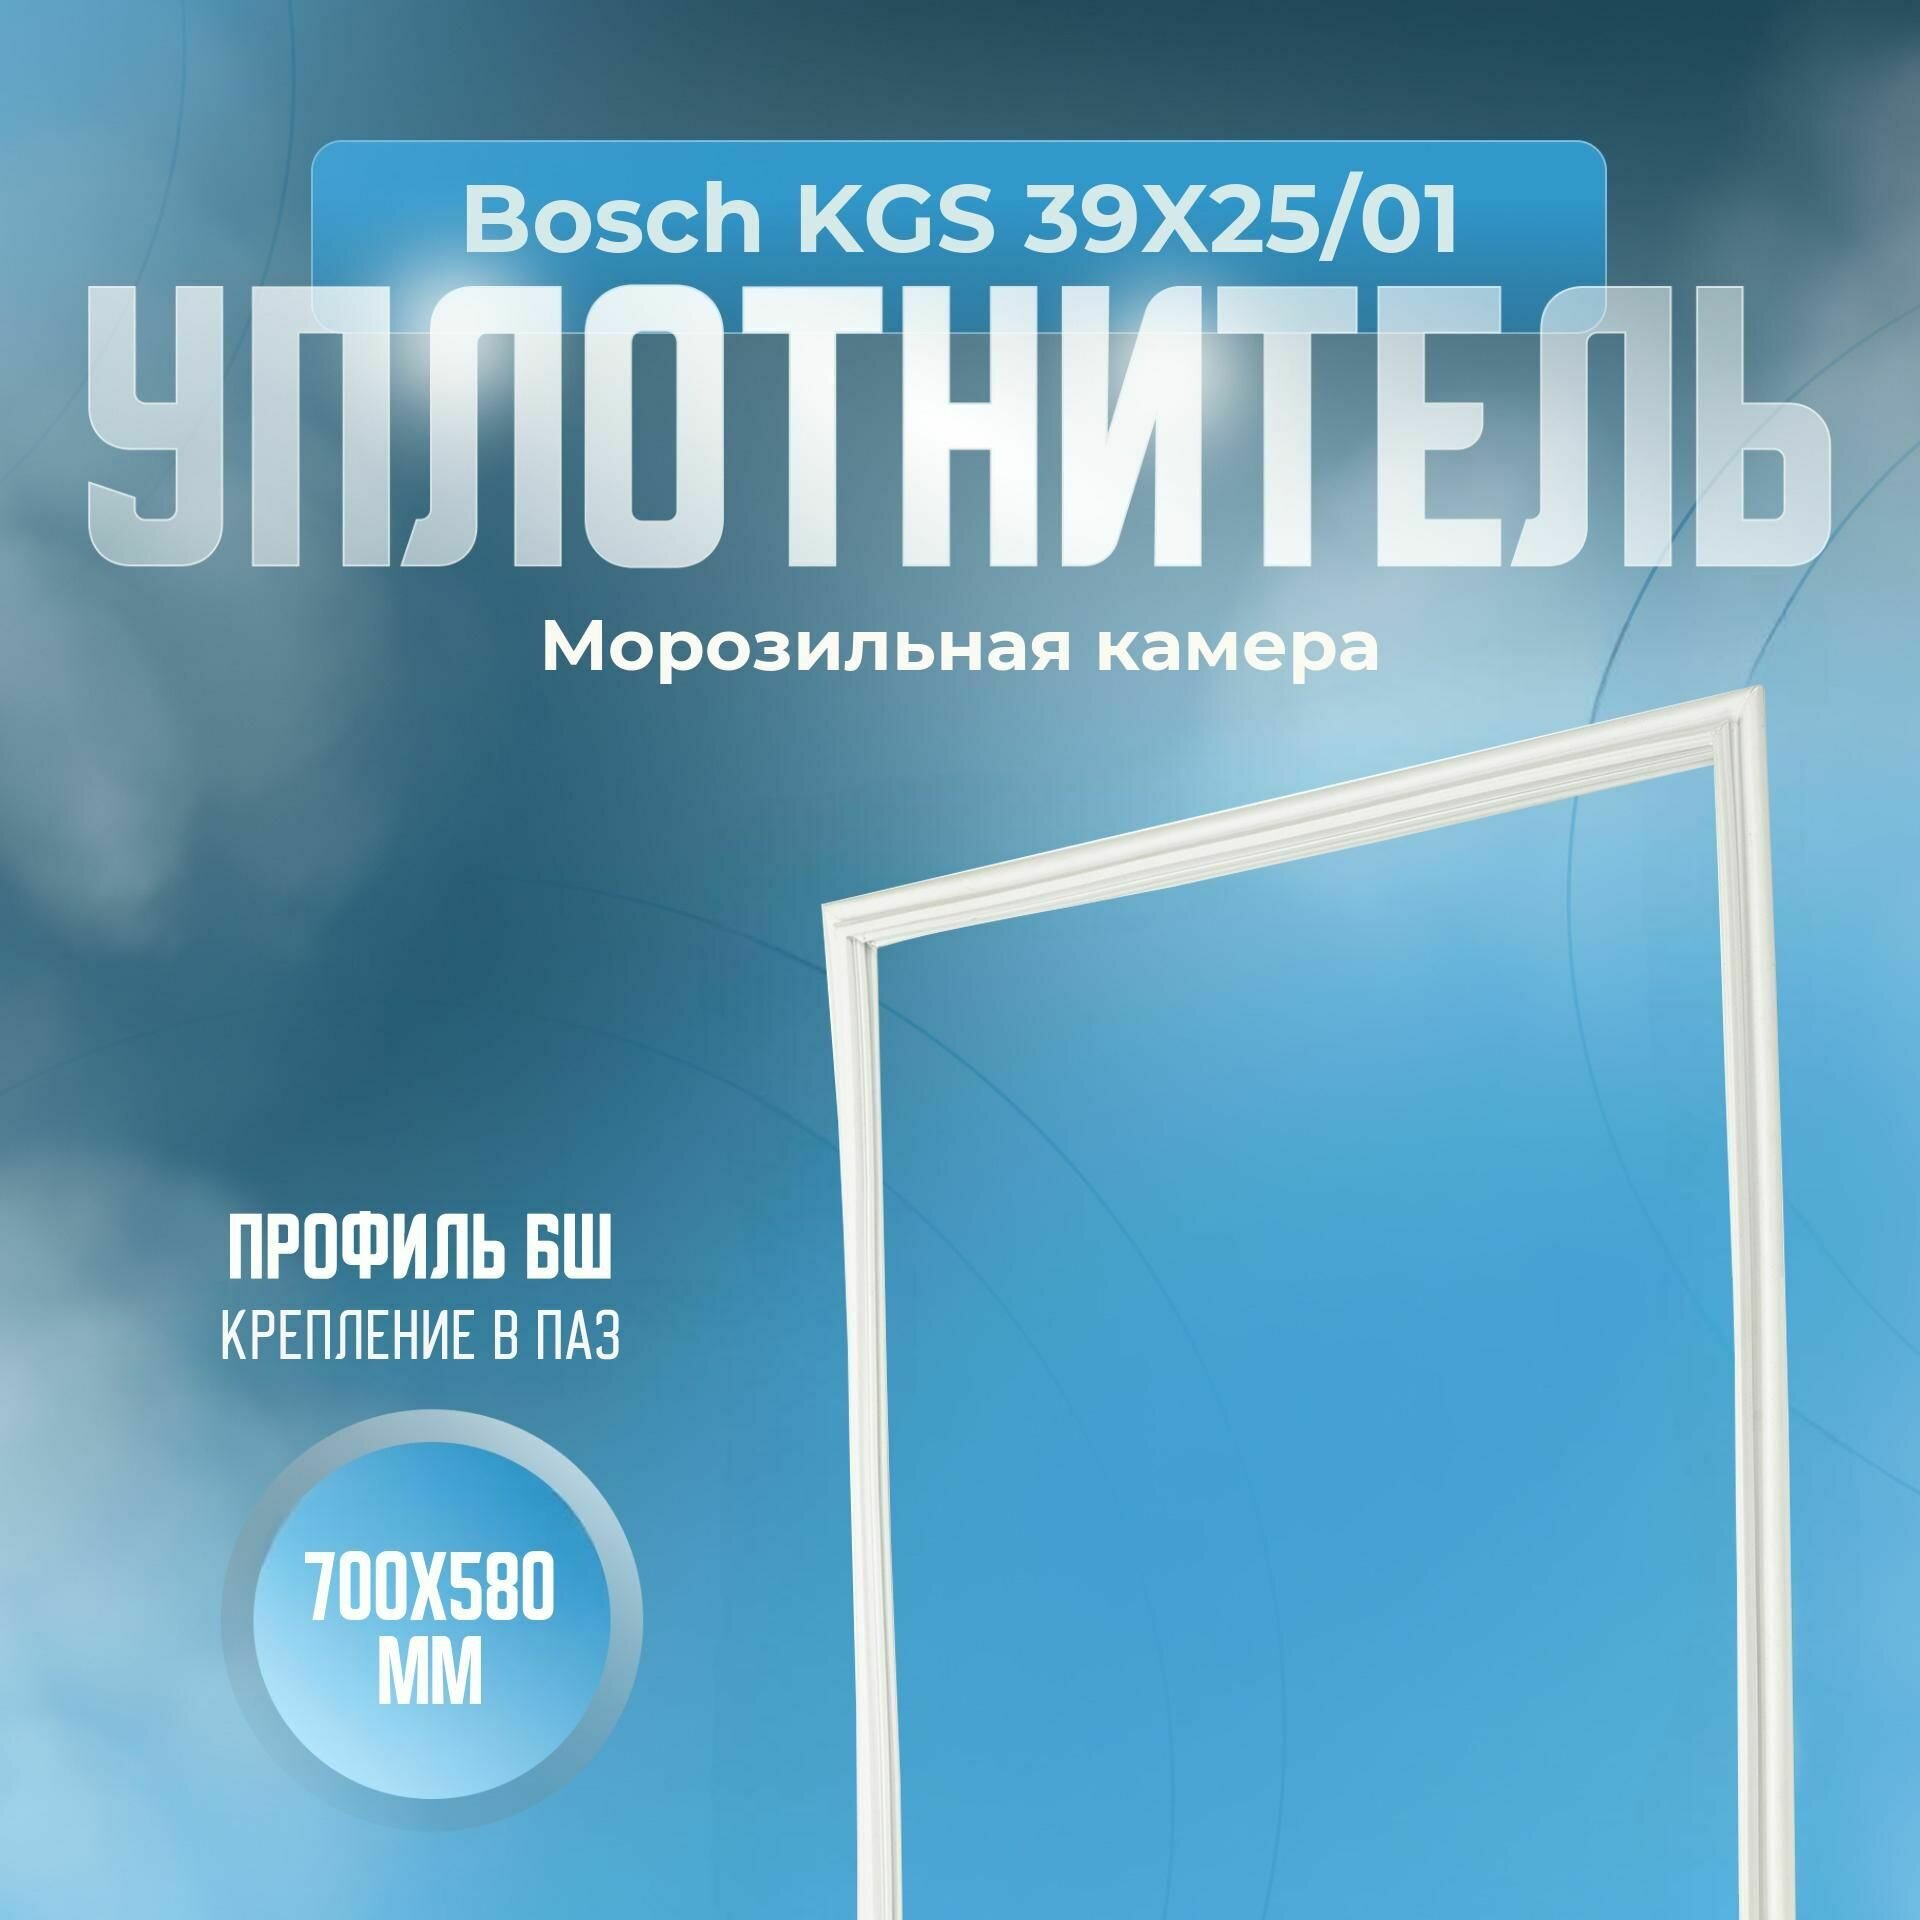 Уплотнитель Bosch KGS 39X25/01. м. к, Размер - 700х580 мм. БШ